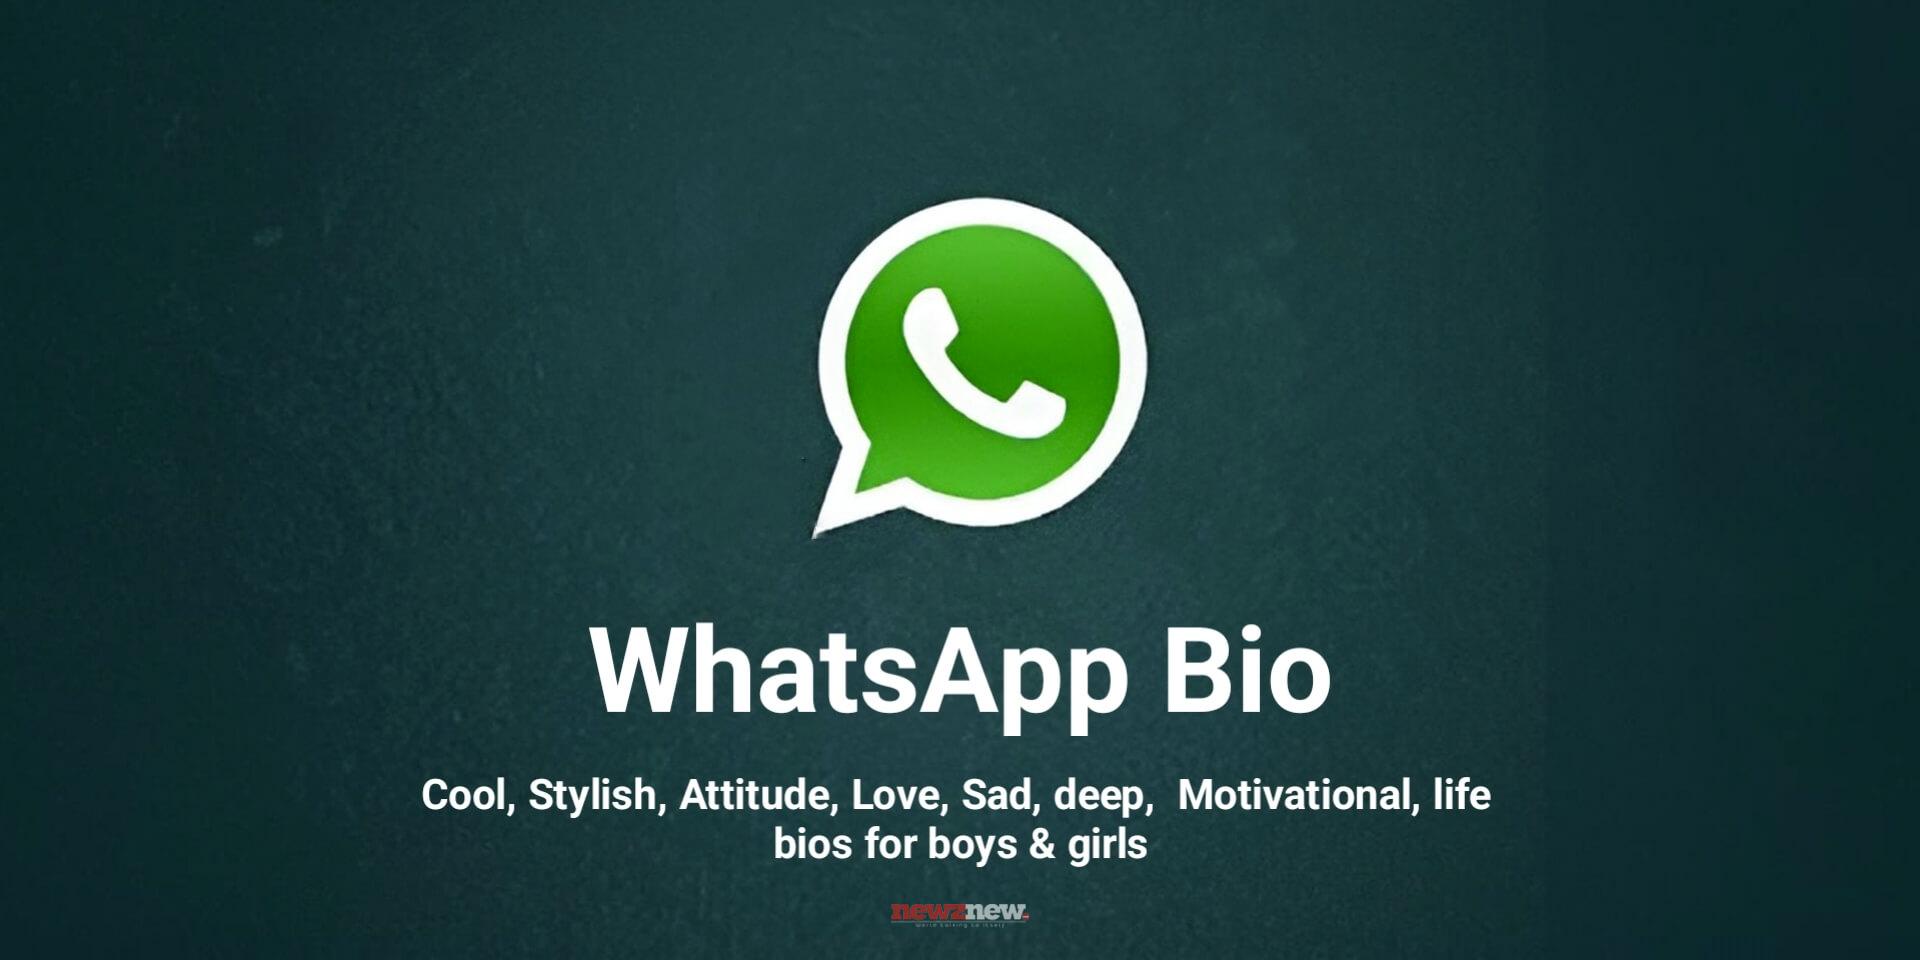 500+ Best WhatsApp Bio Ideas for Men and Women